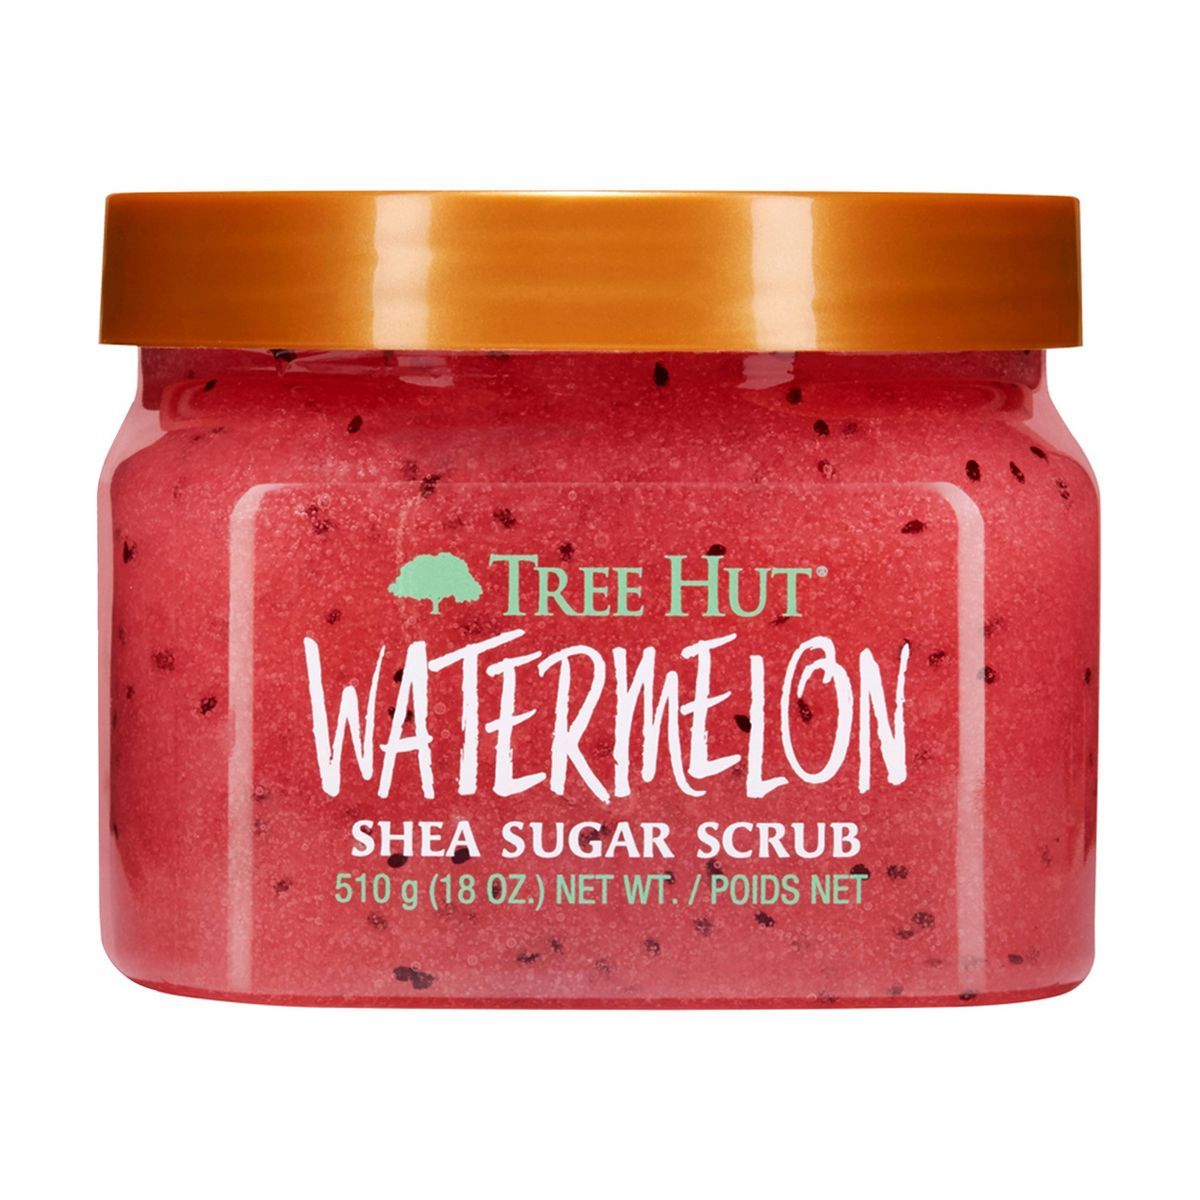 Tree Hut Watermelon Shea Sugar Body Scrub - 18oz | Target